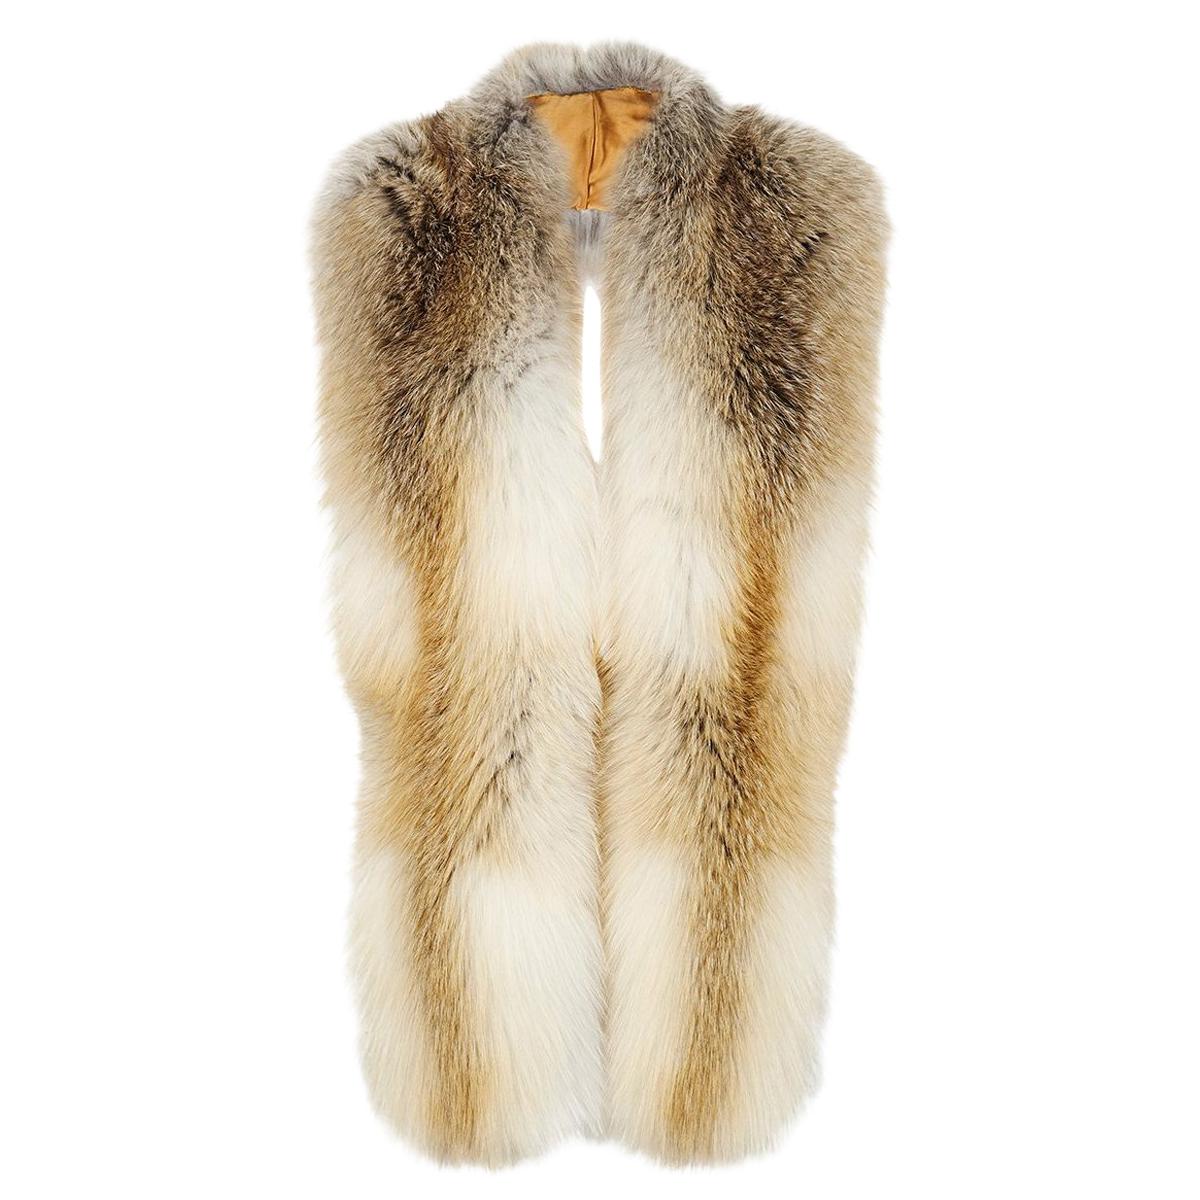 Verheyen London Legacy Stole Natural Golden Island Fox Fur - Lined in Silk & New